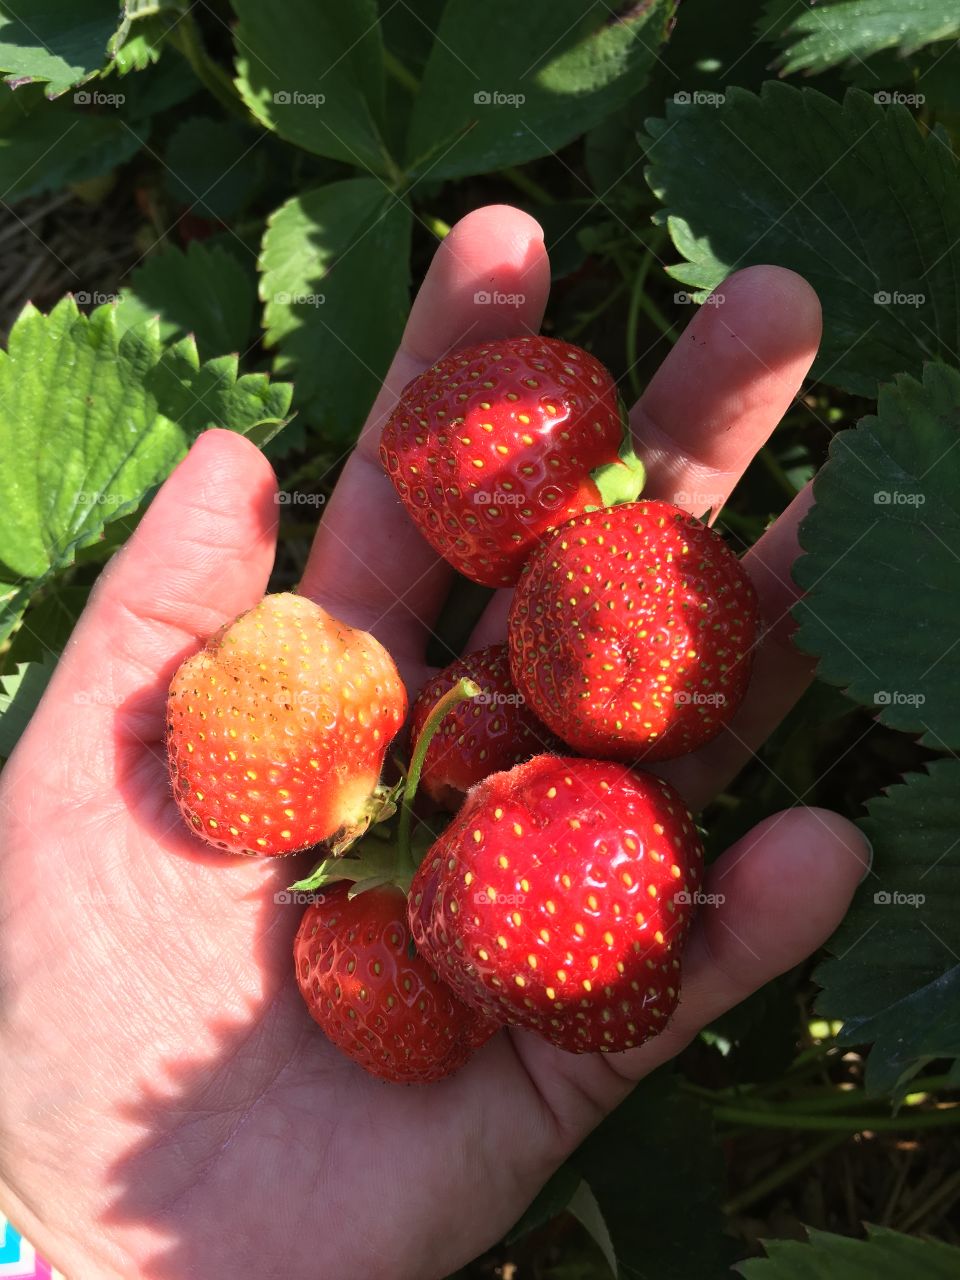 Picking strawberries 